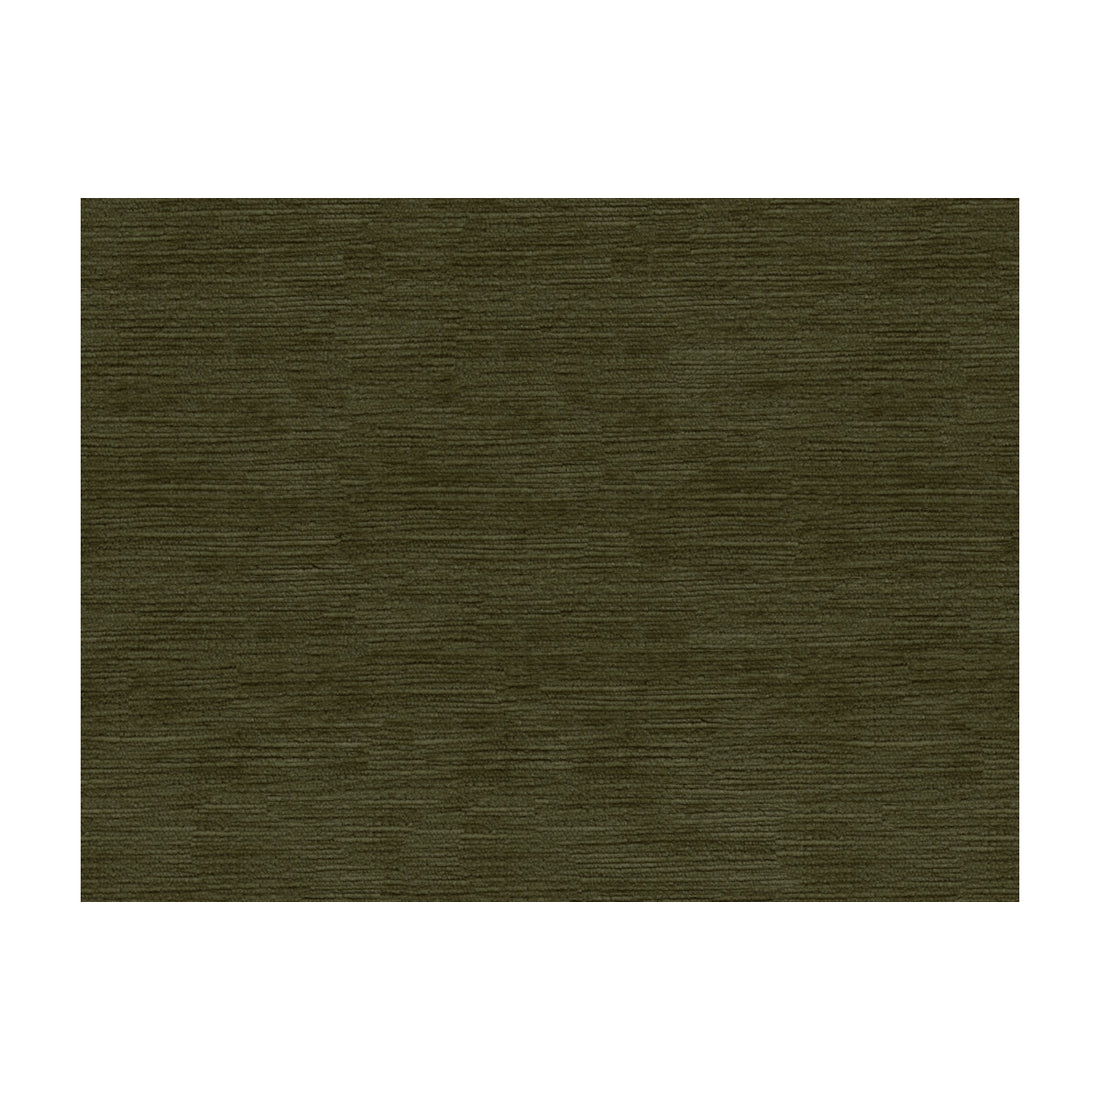 Thanon Linen Velvet fabric in walnut color - pattern BR-89776.880.0 - by Brunschwig &amp; Fils